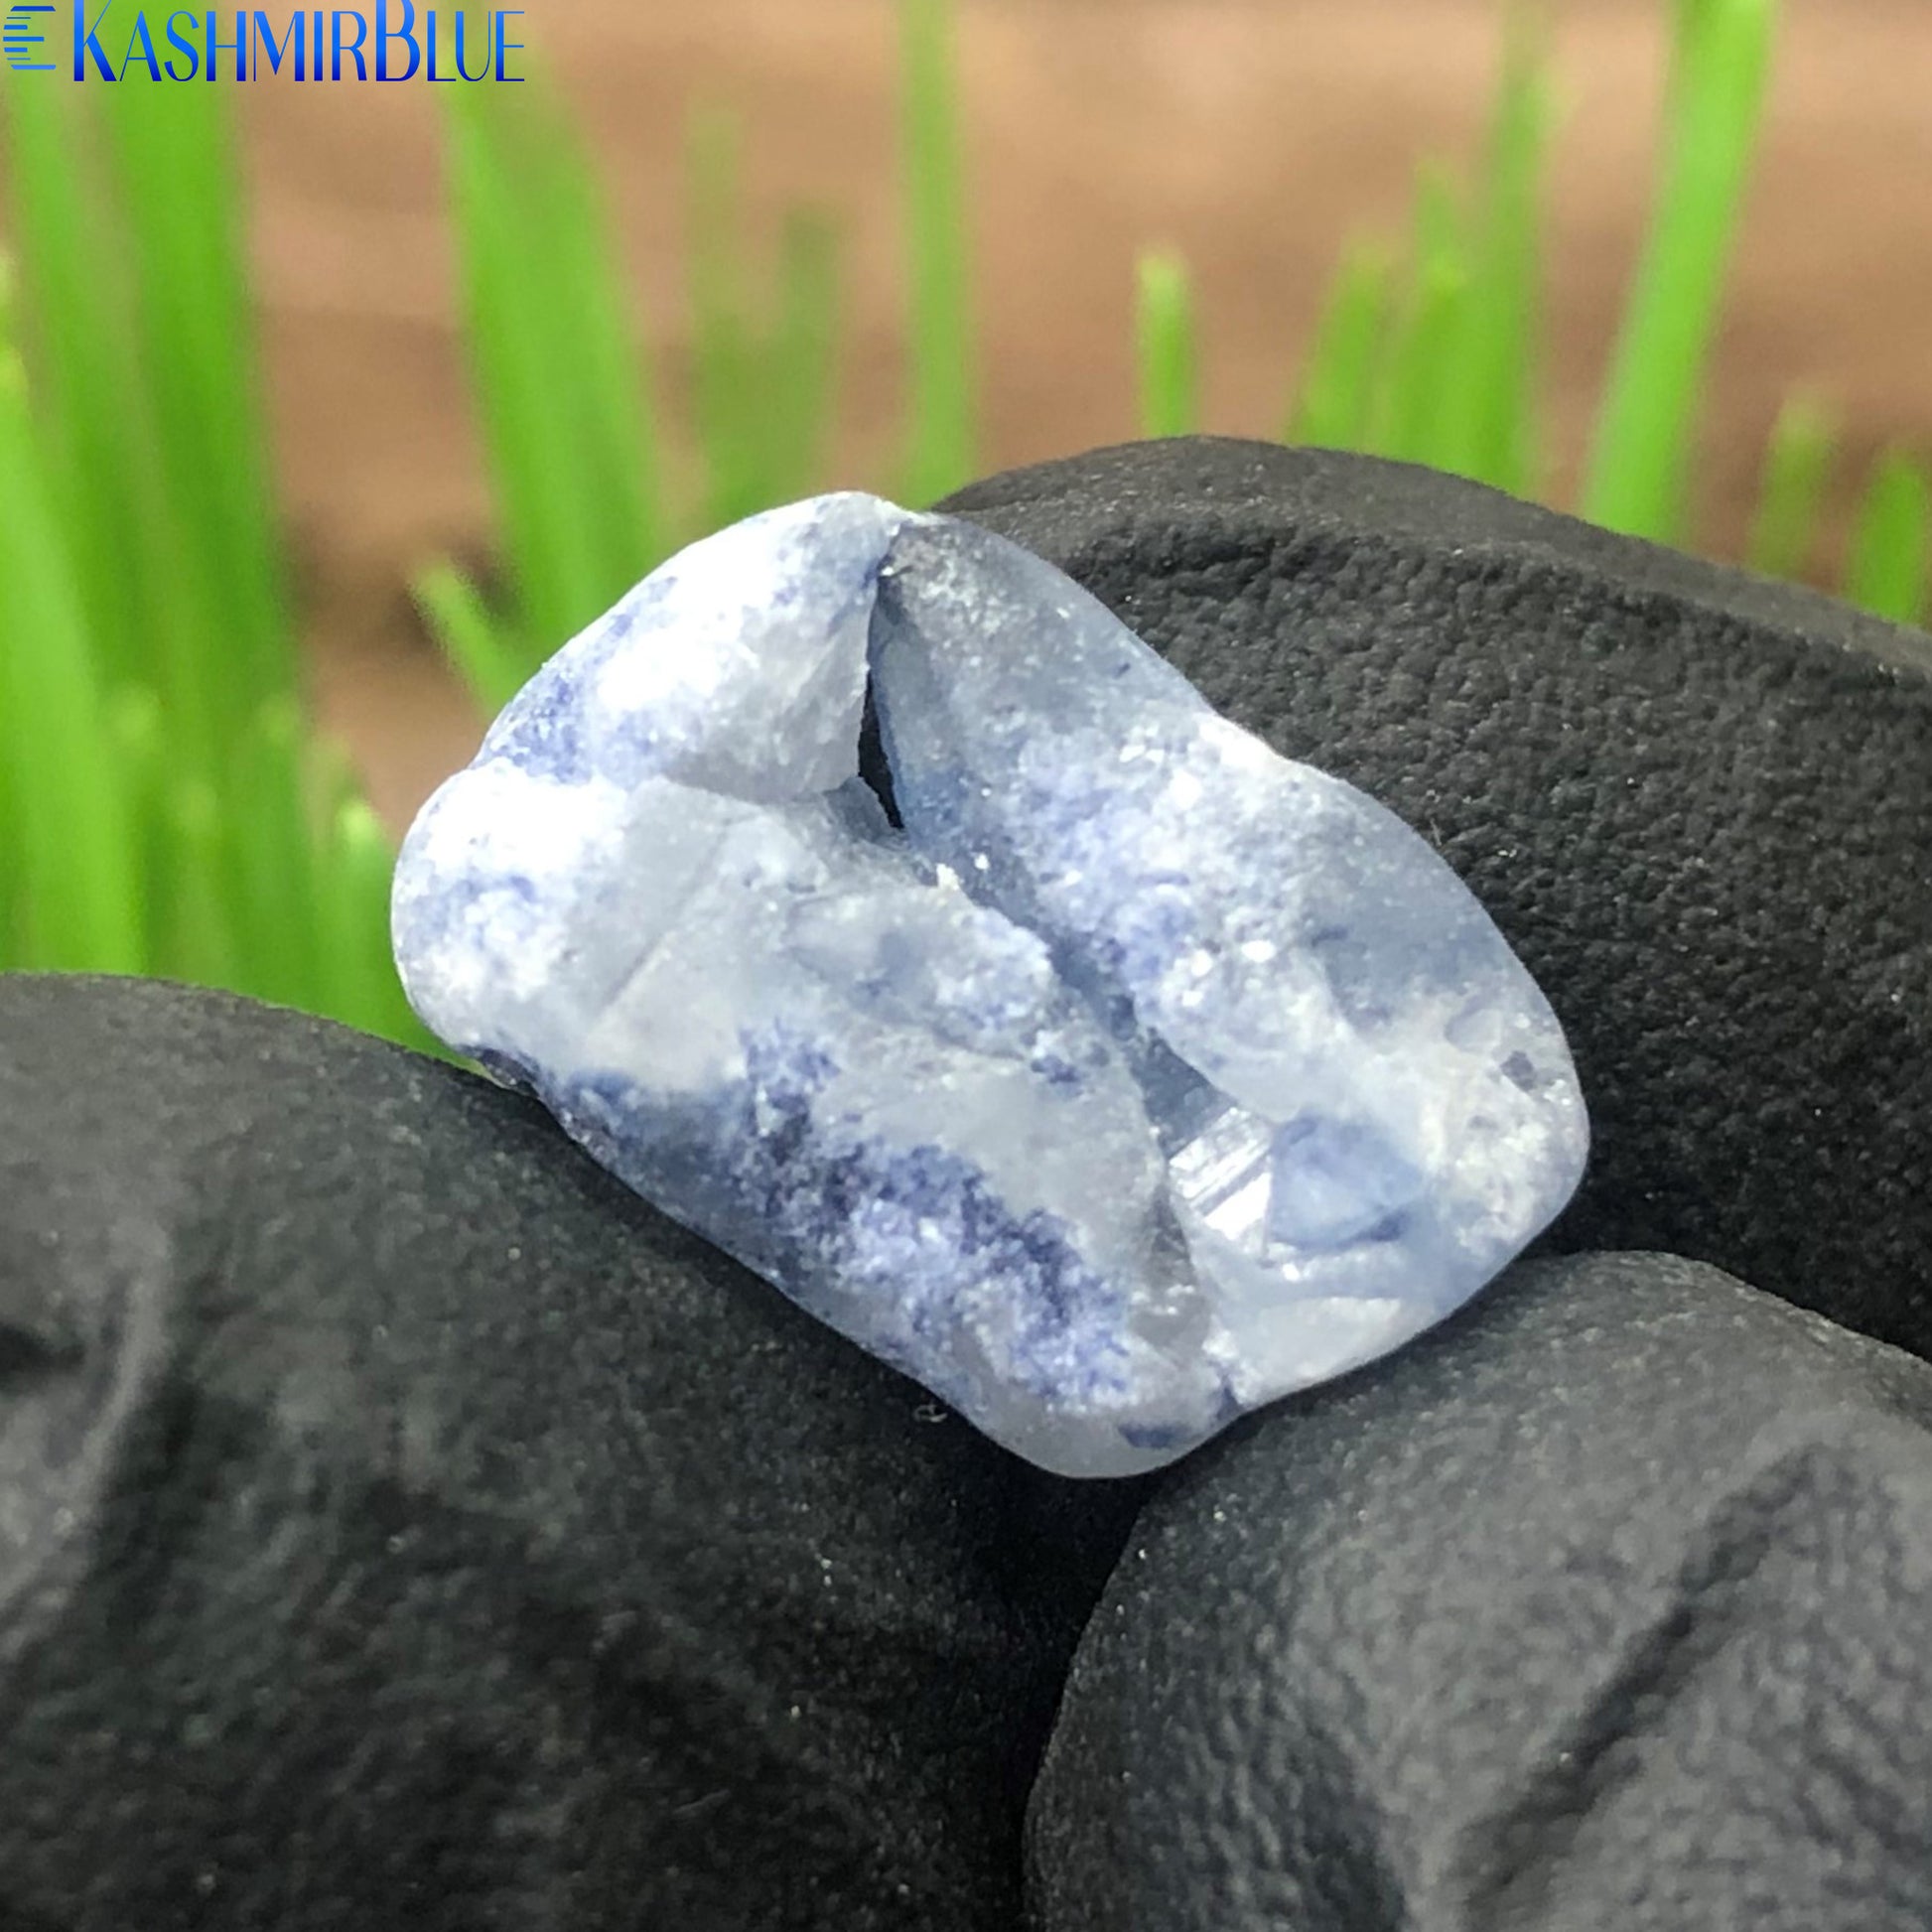 Kashmir Sapphire Twin Crystal Specimen